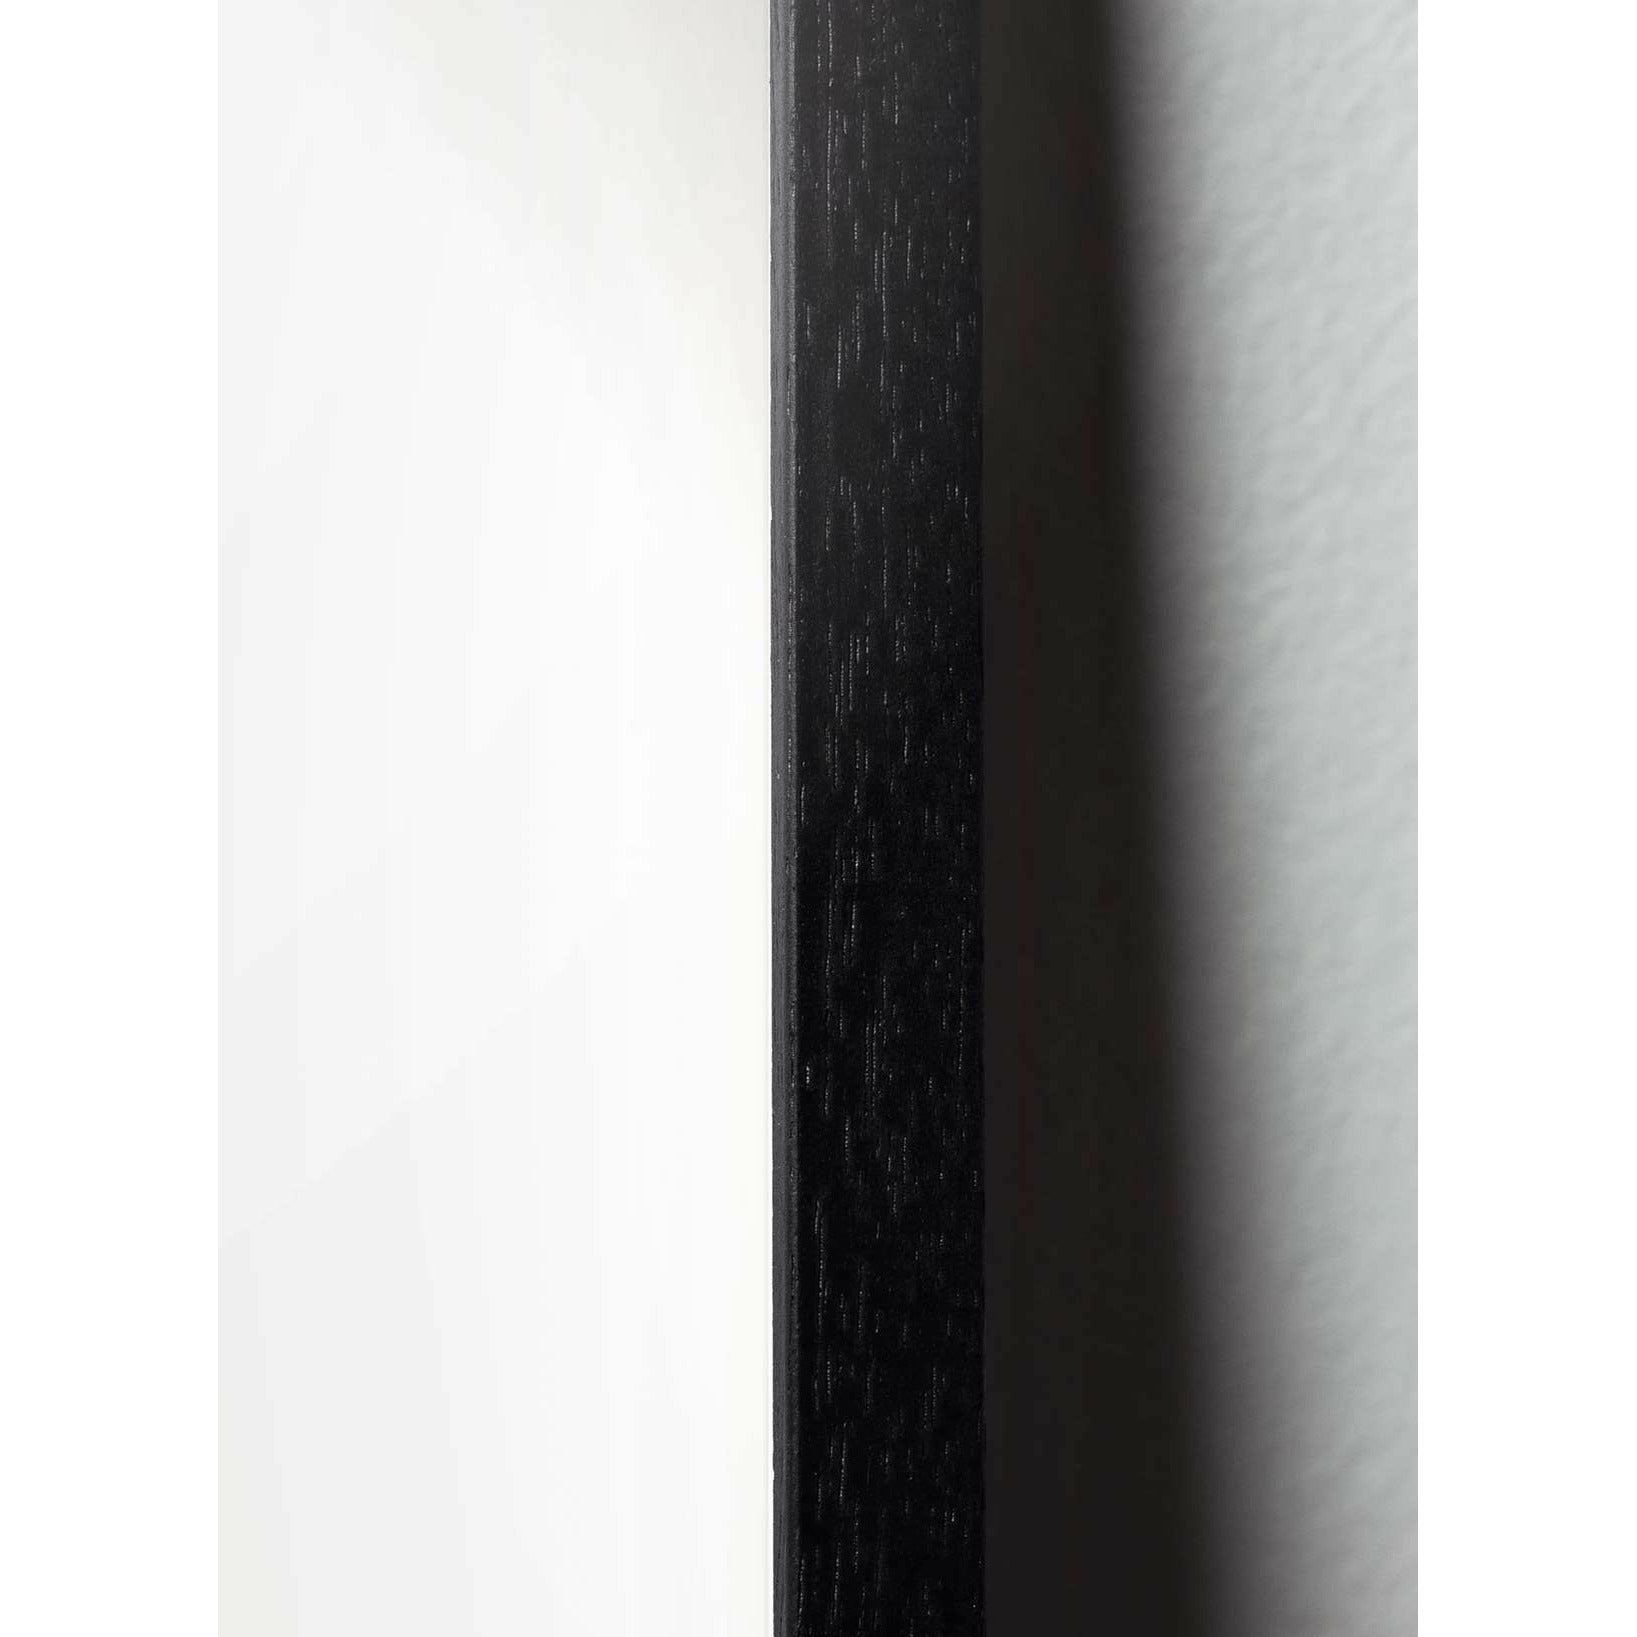 Brainchild Släpp klassisk affisch, ram i svart -målat trä 30x40 cm, sandfärgad bakgrund